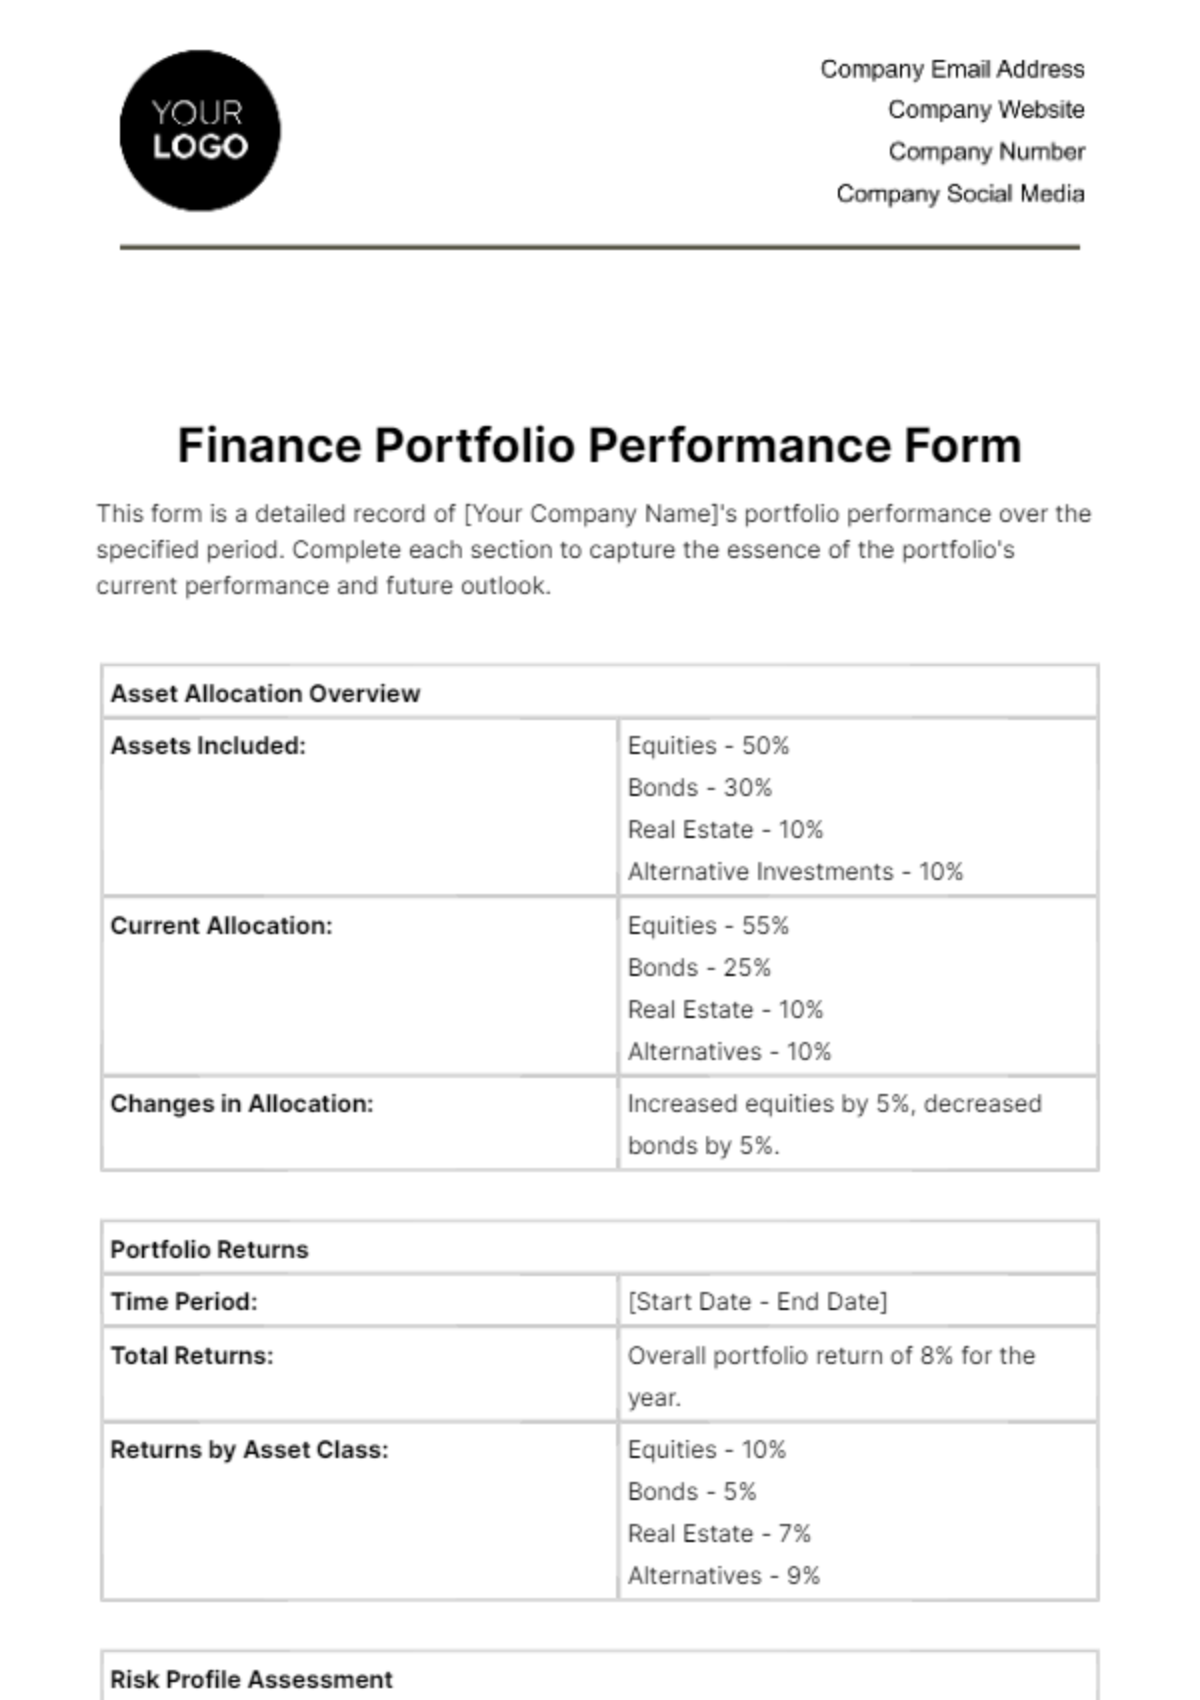 Finance Portfolio Performance Form Template